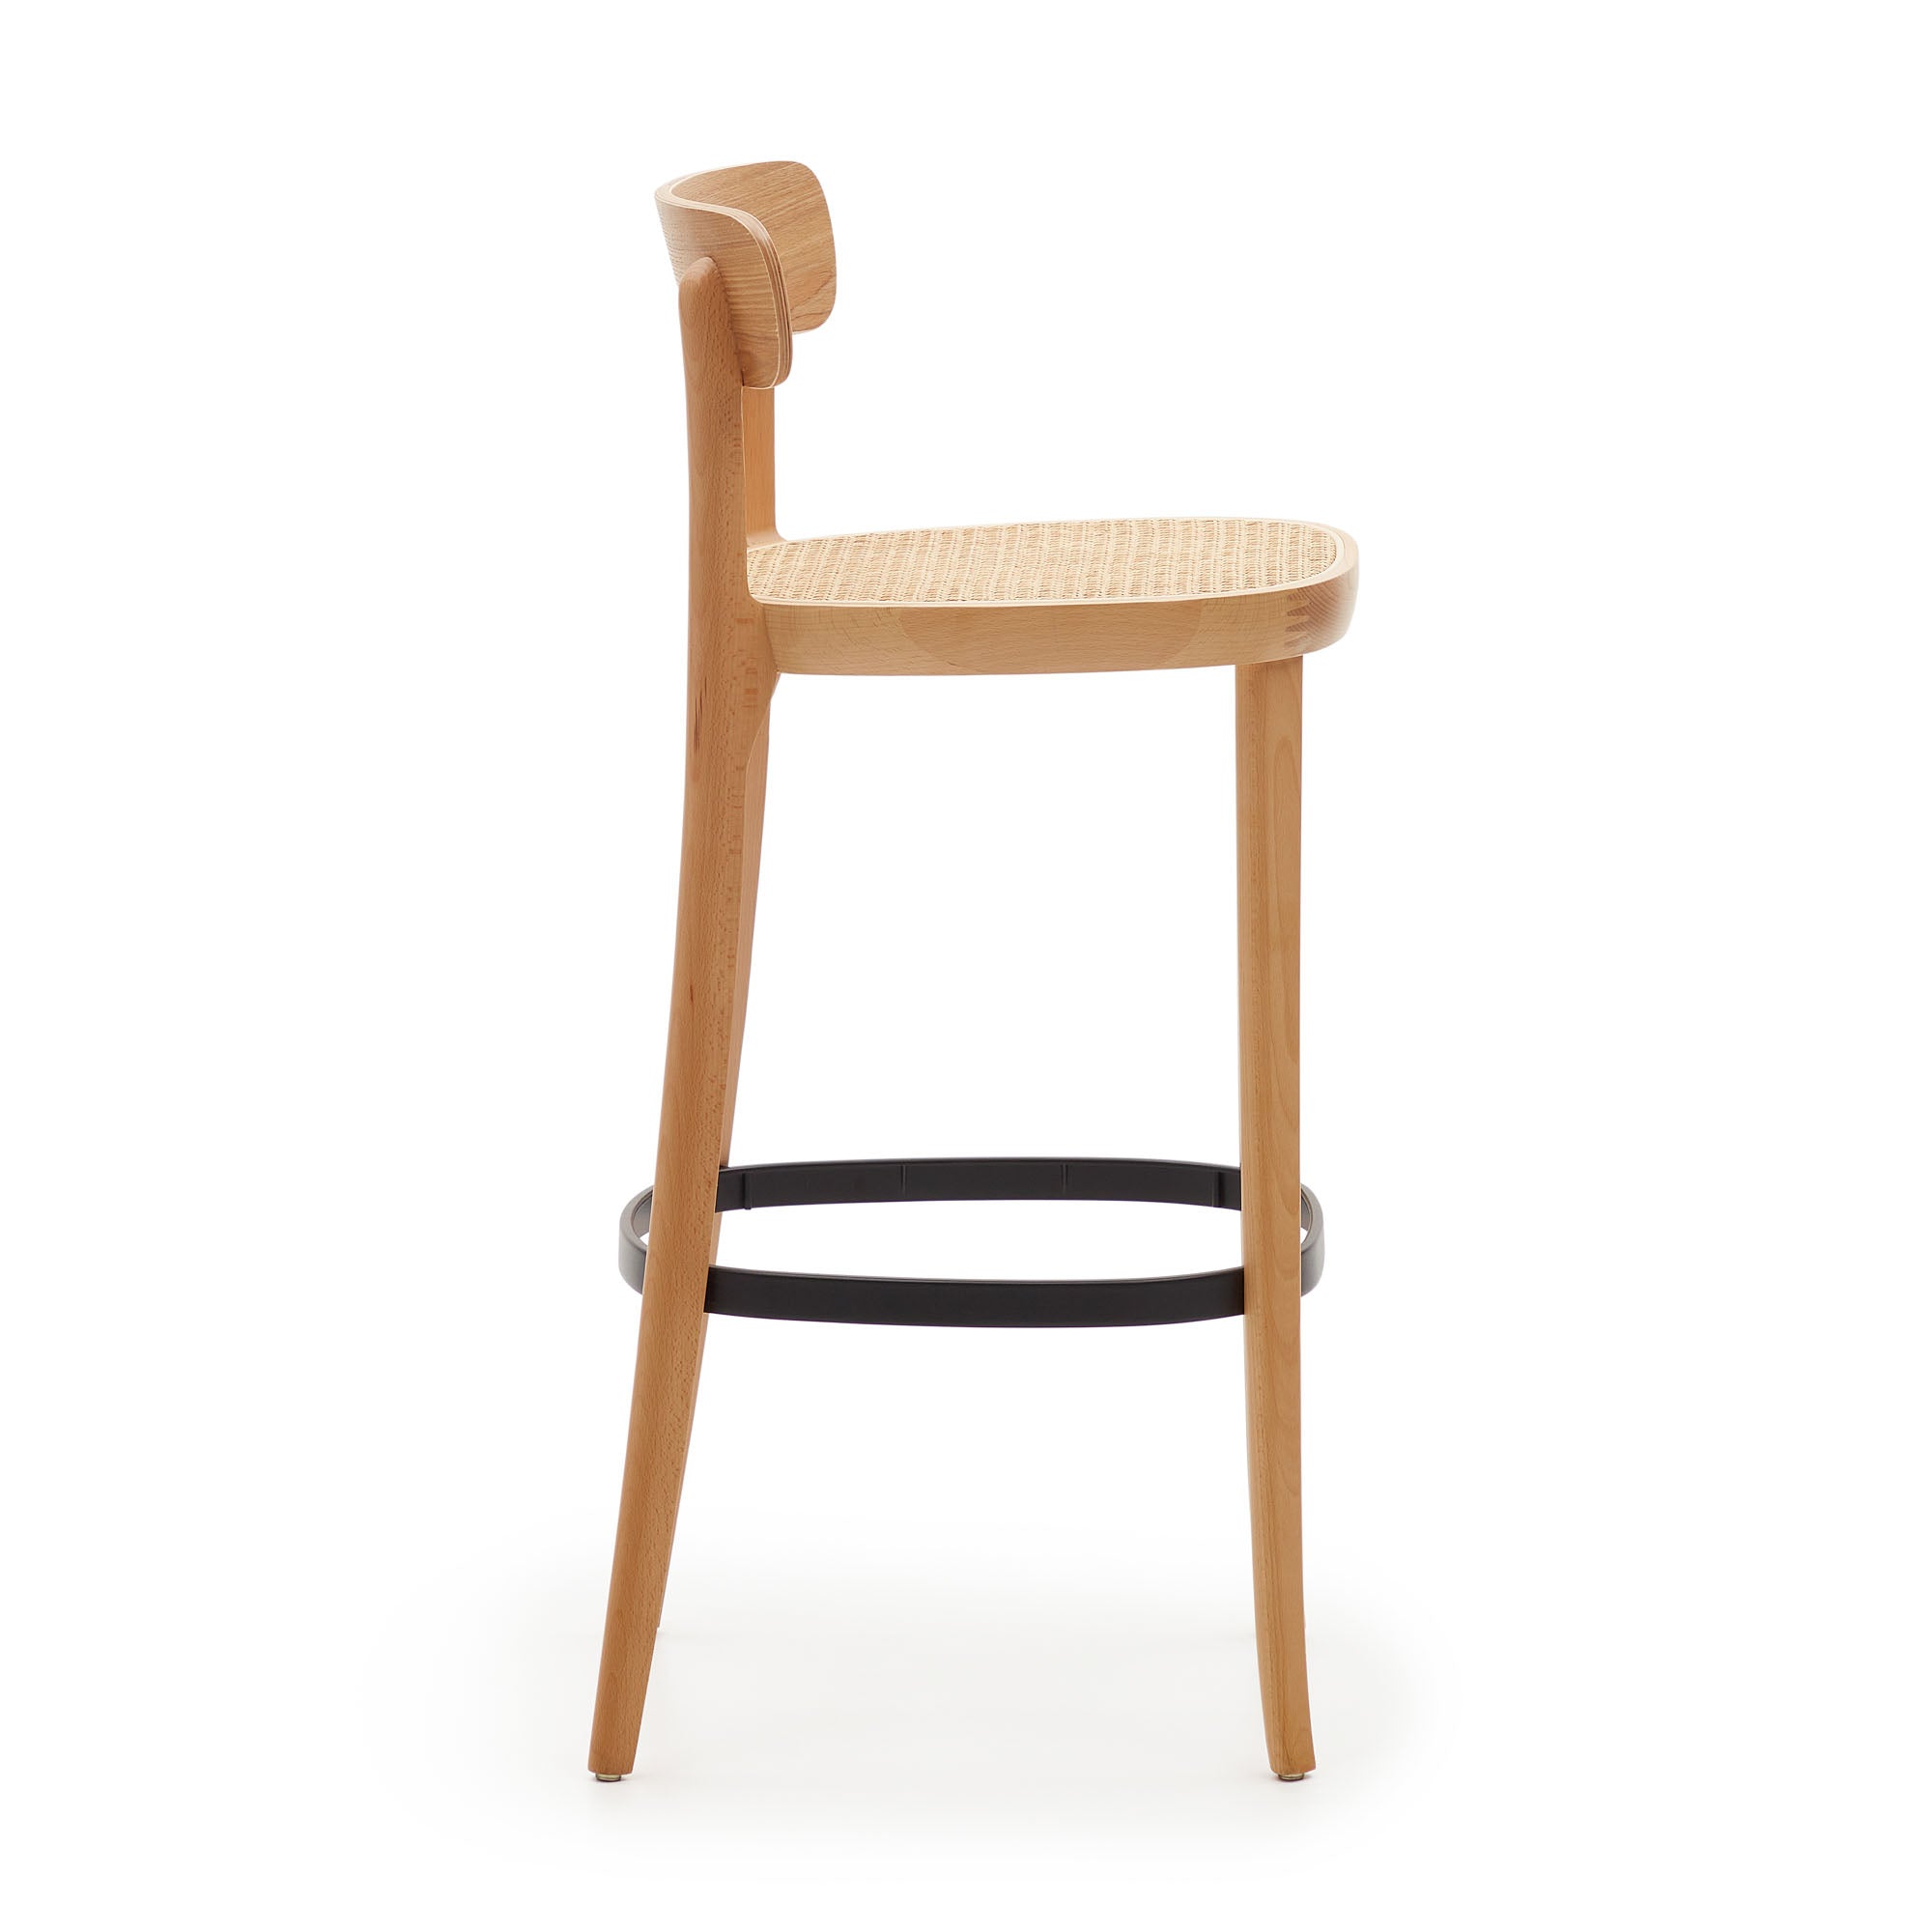 Romane stool beechwood stool with a natural finish, ash wood veneer and ratan seat 75 cm